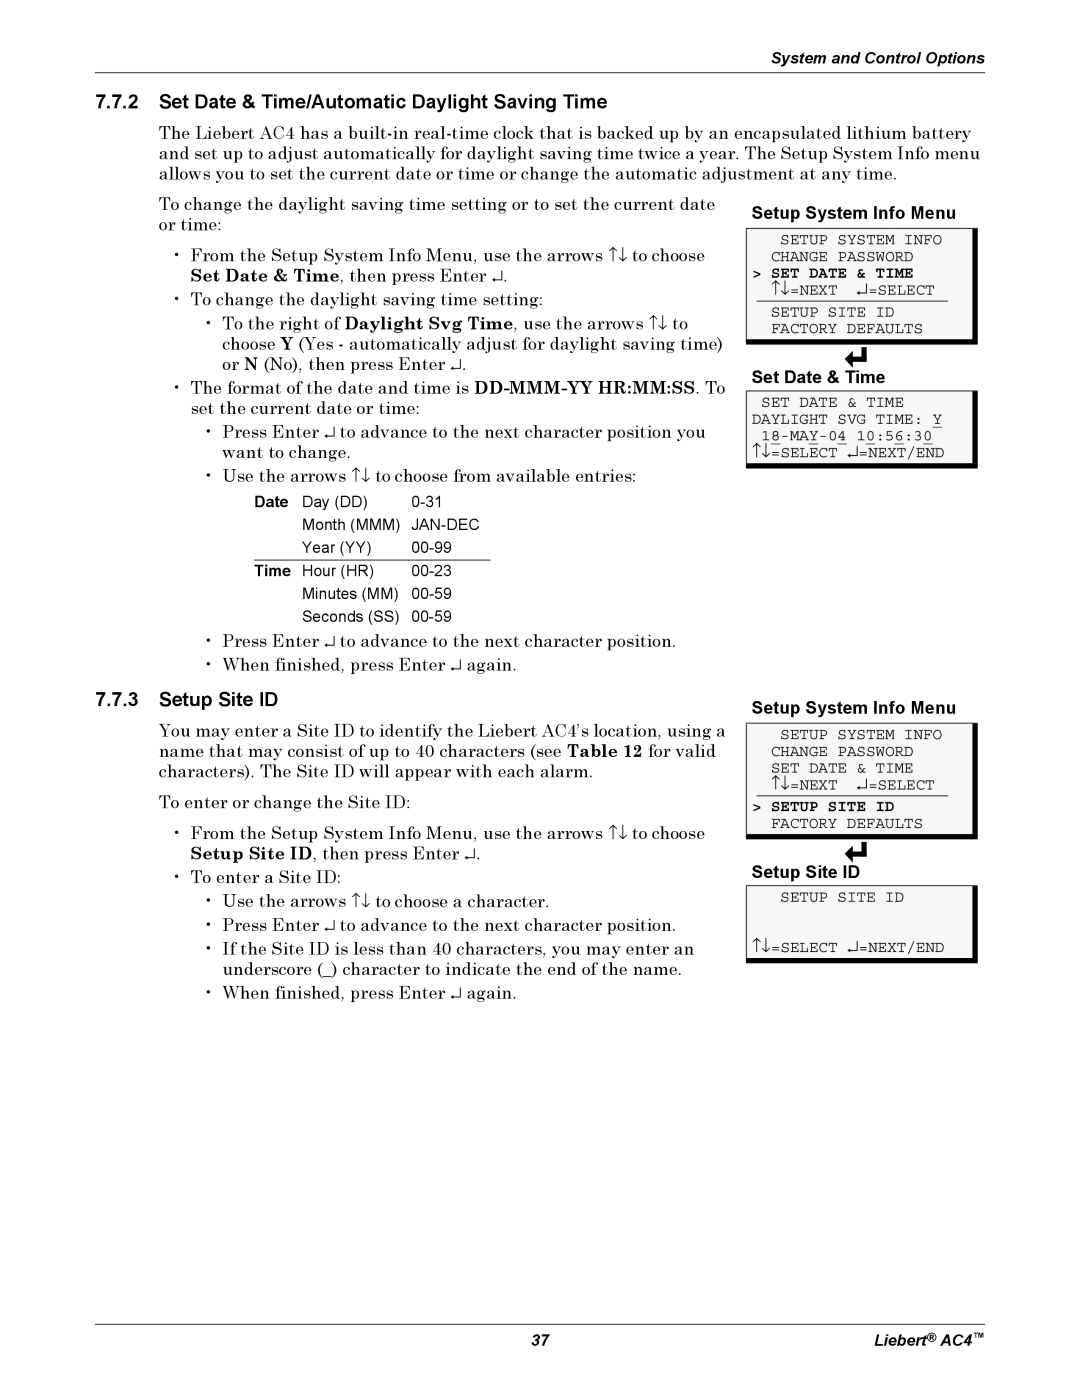 Emerson AC4 user manual 7.7.3Setup Site ID, Setup System Info Menu, Set Date & Time 